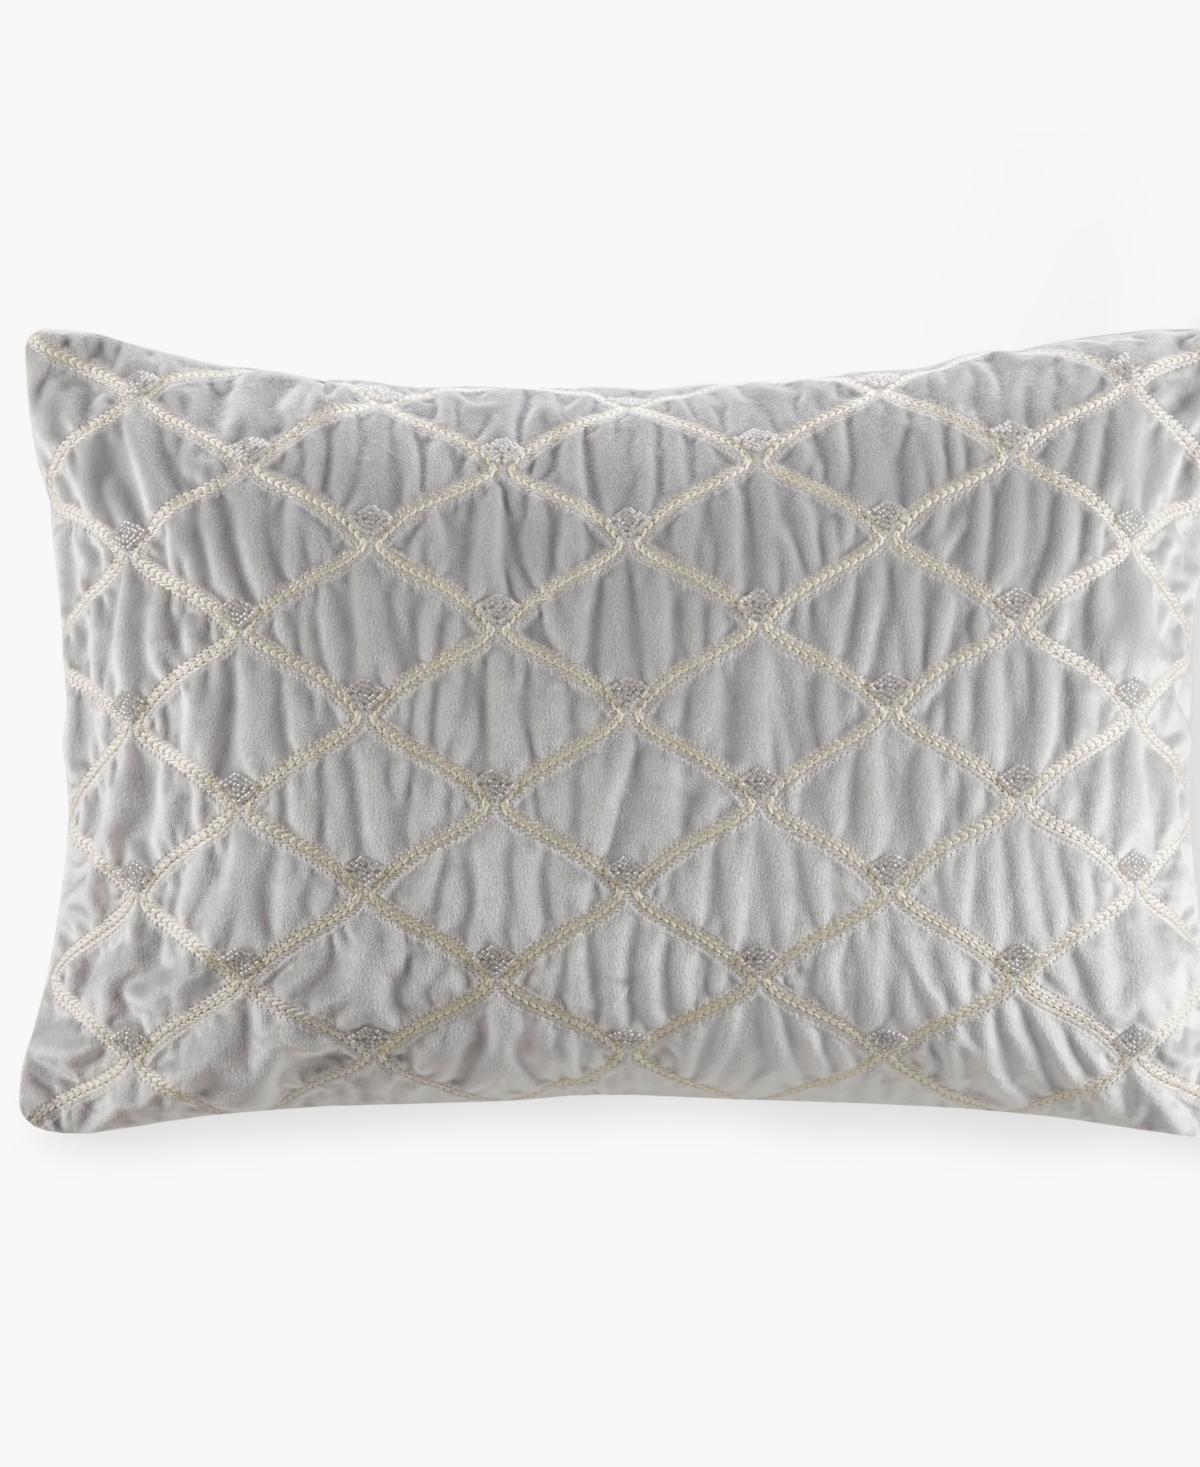 Croscill Aumont Oblong Decorative Pillow, 22" X 15" In Silver